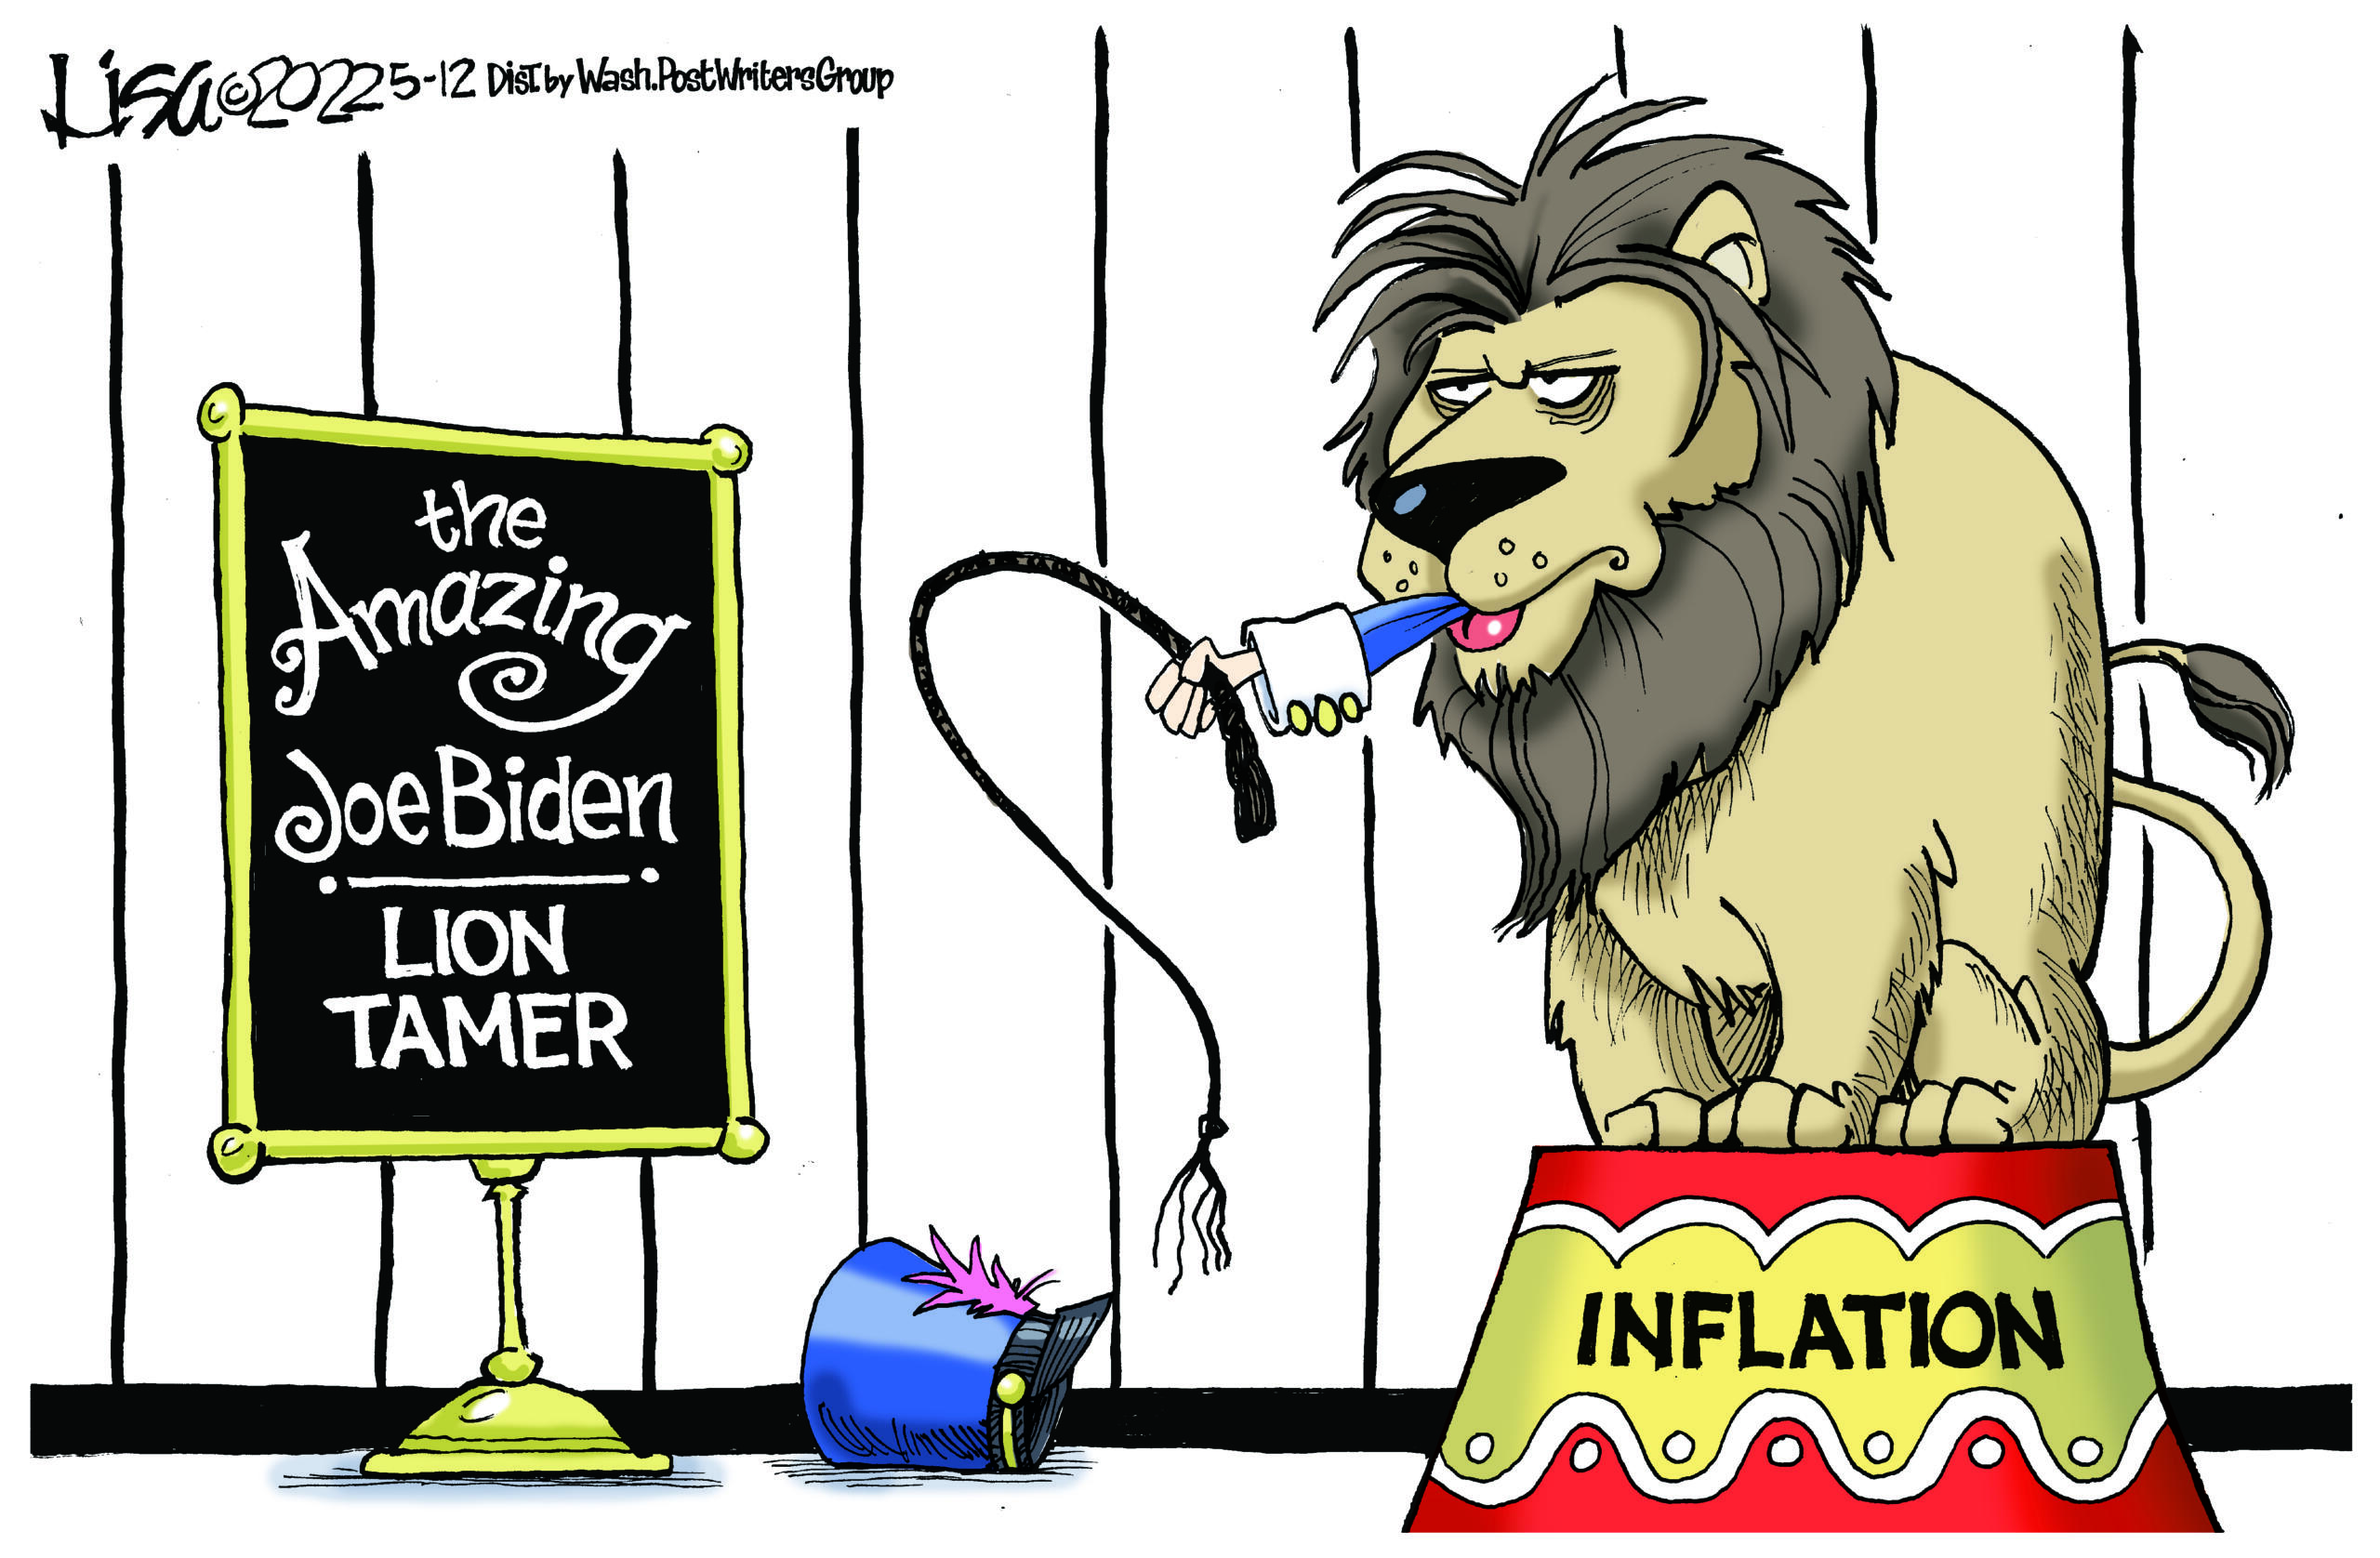 May 14:  Inflation